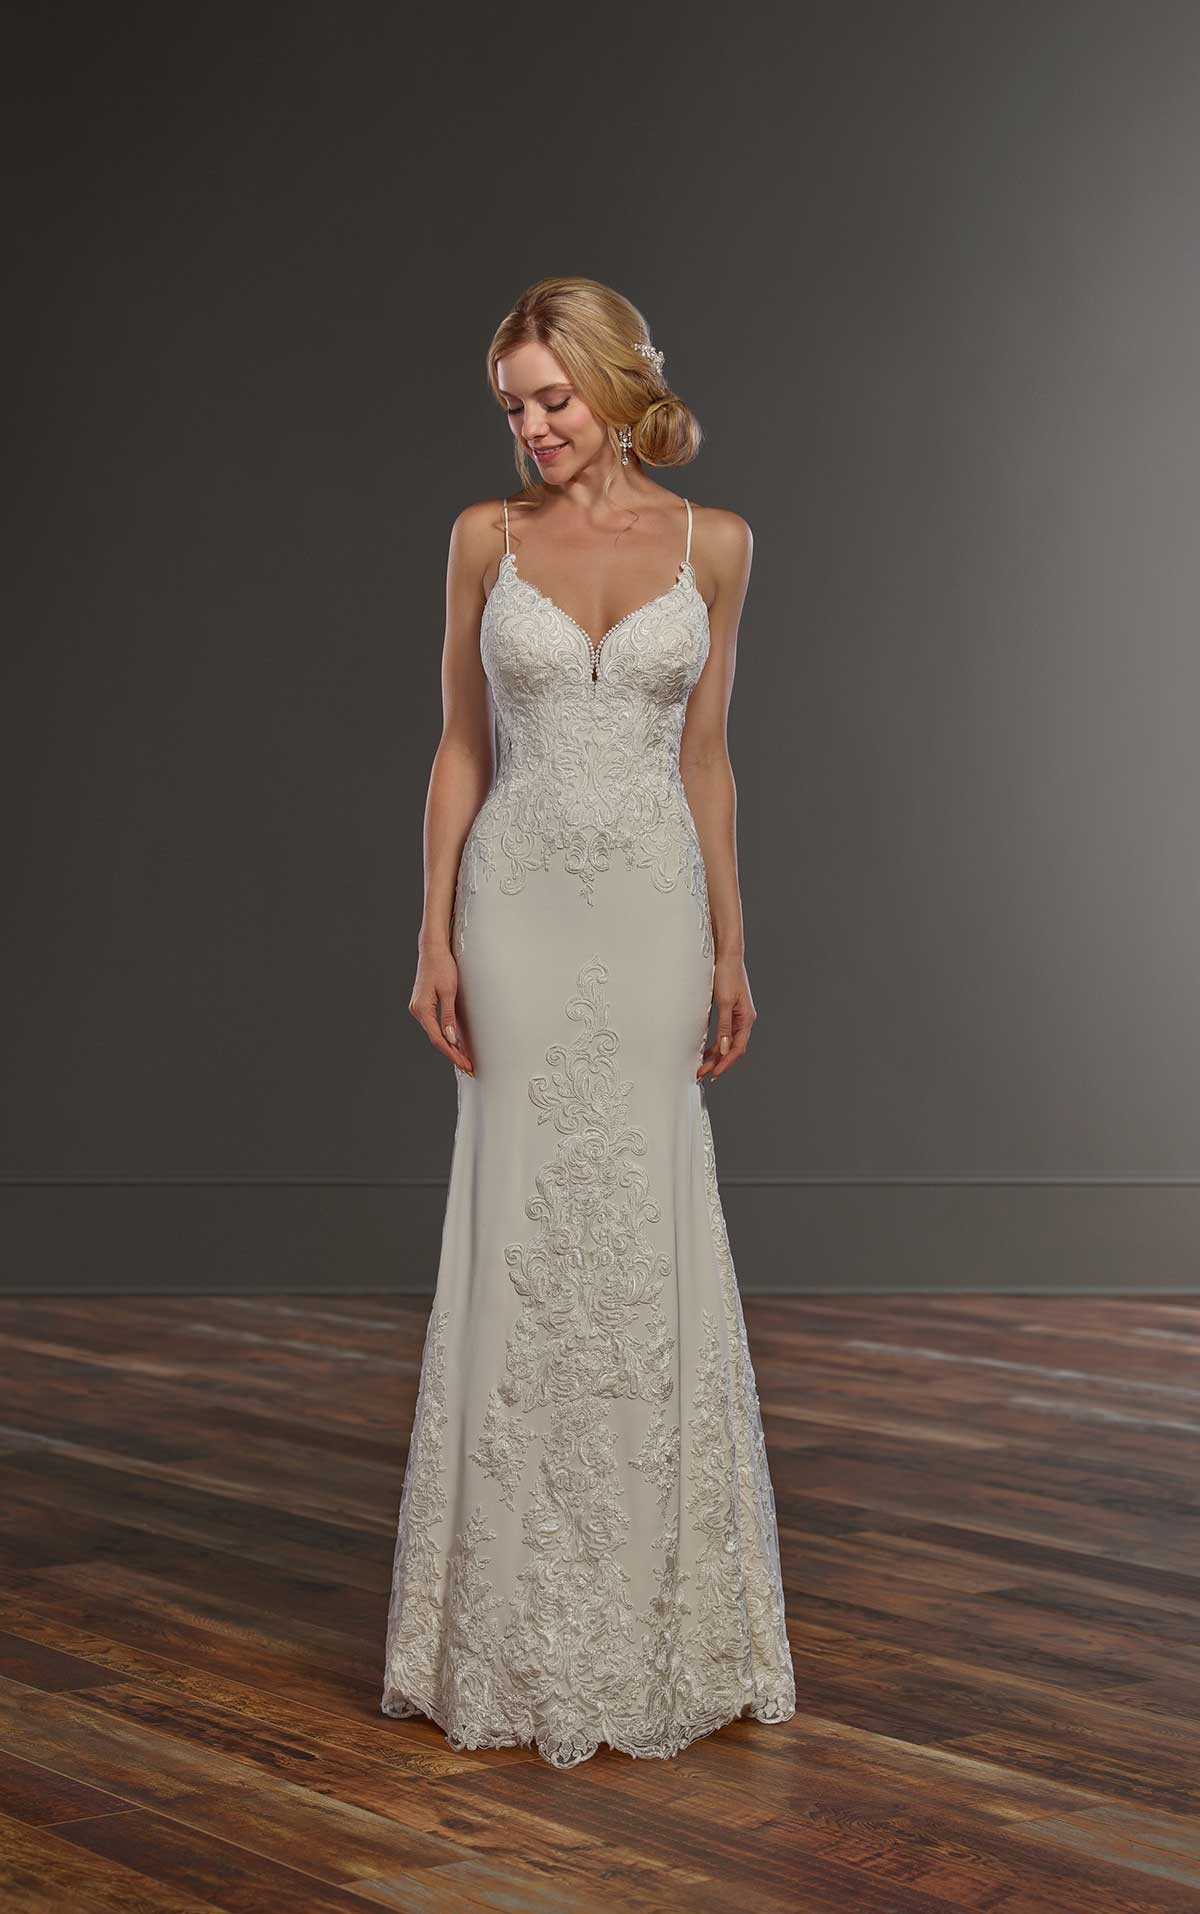 Lace Sheath Wedding Dress
 Romantic Lace Sheath Wedding Gown